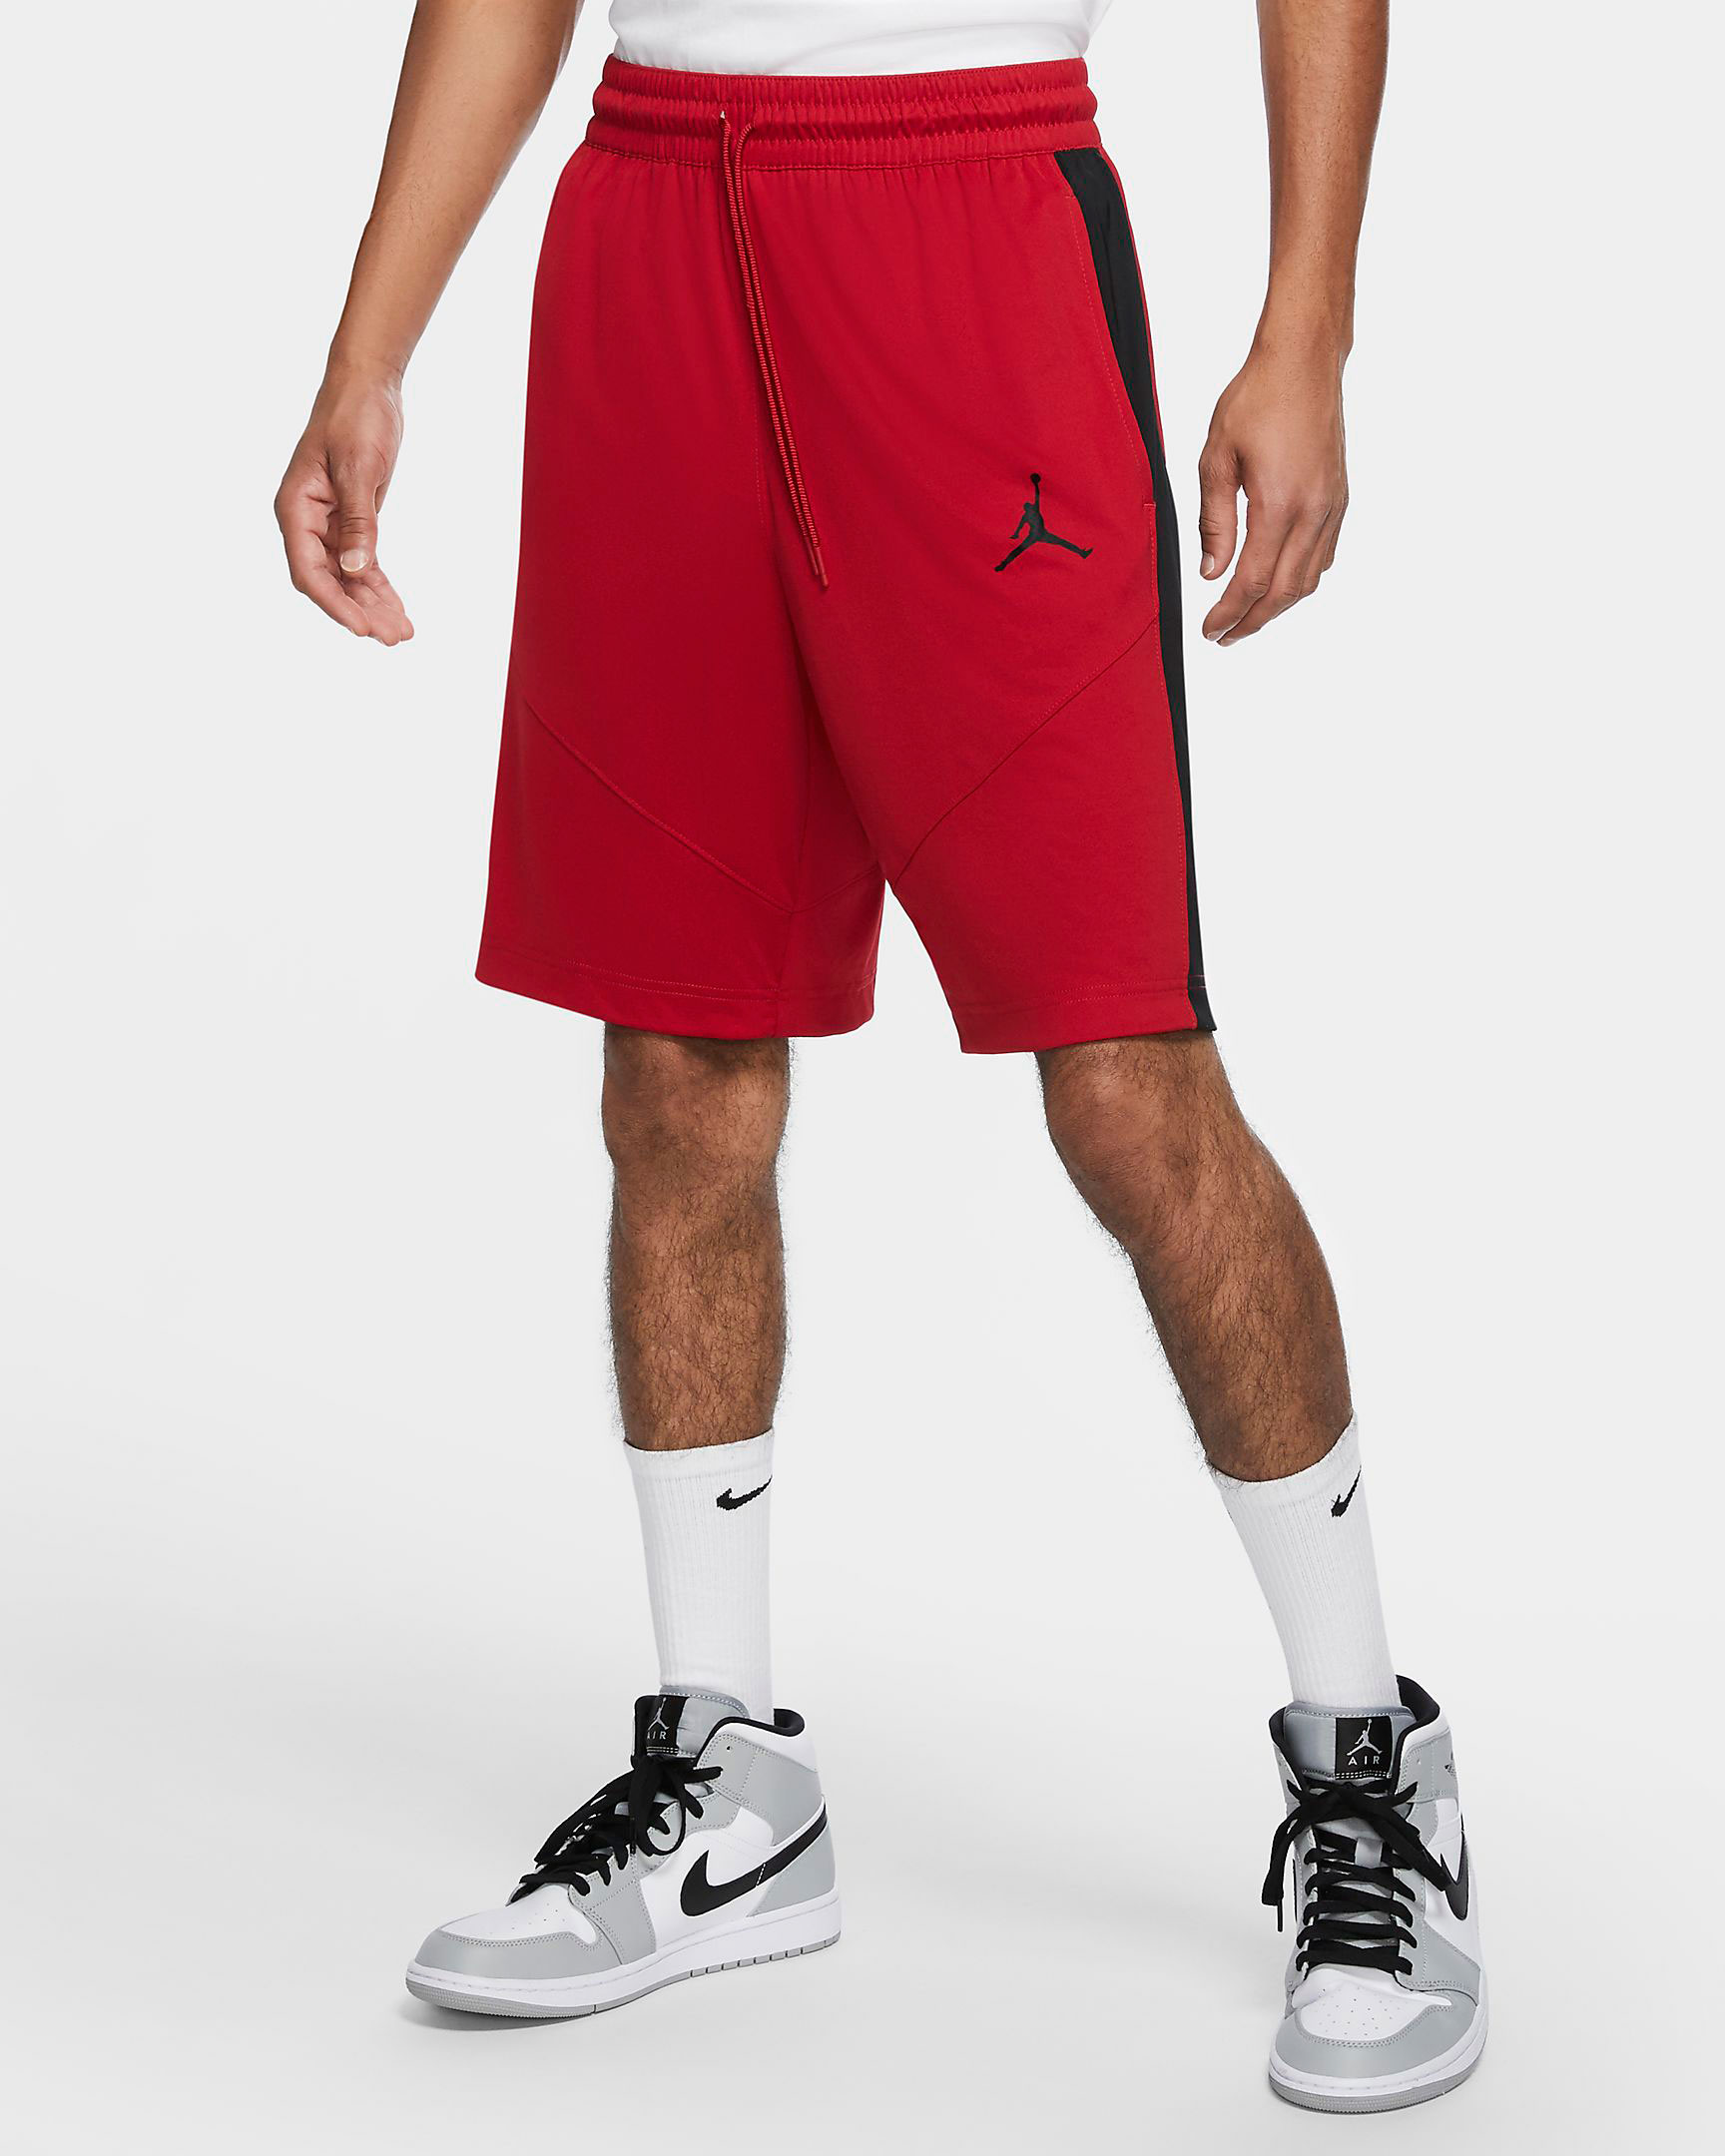 jordan-gym-red-black-basketball-shorts-1